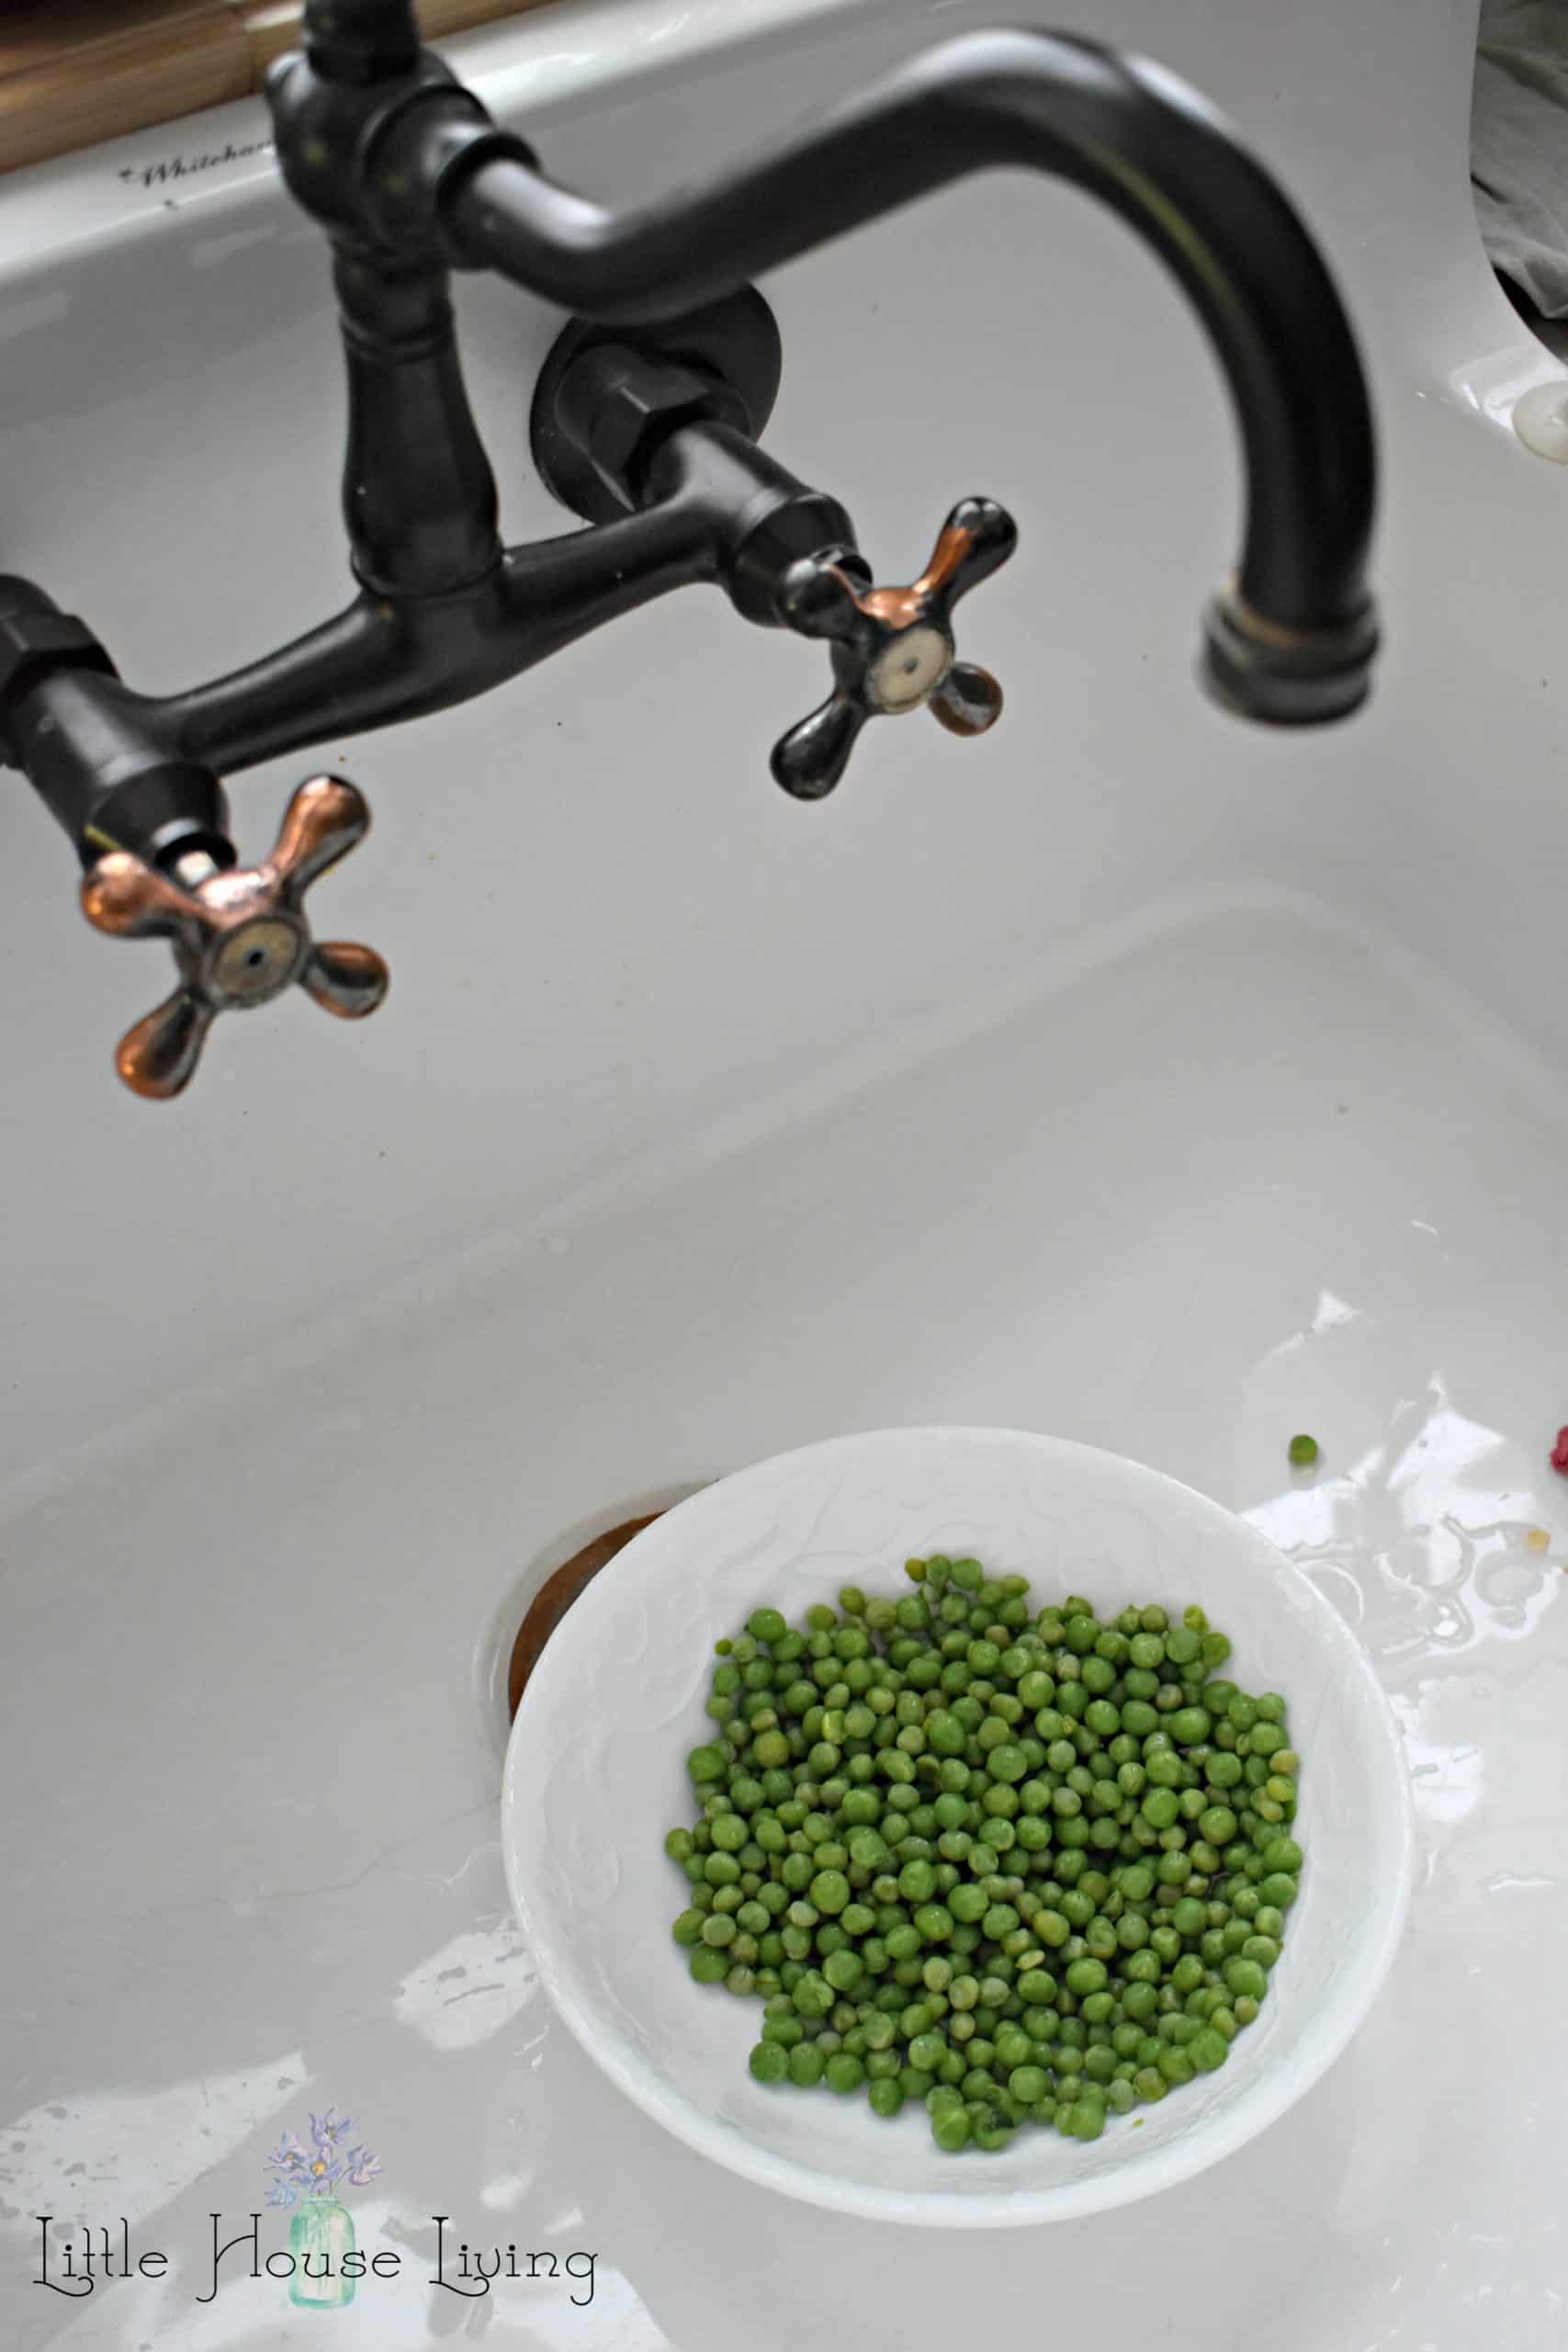 Washing Peas